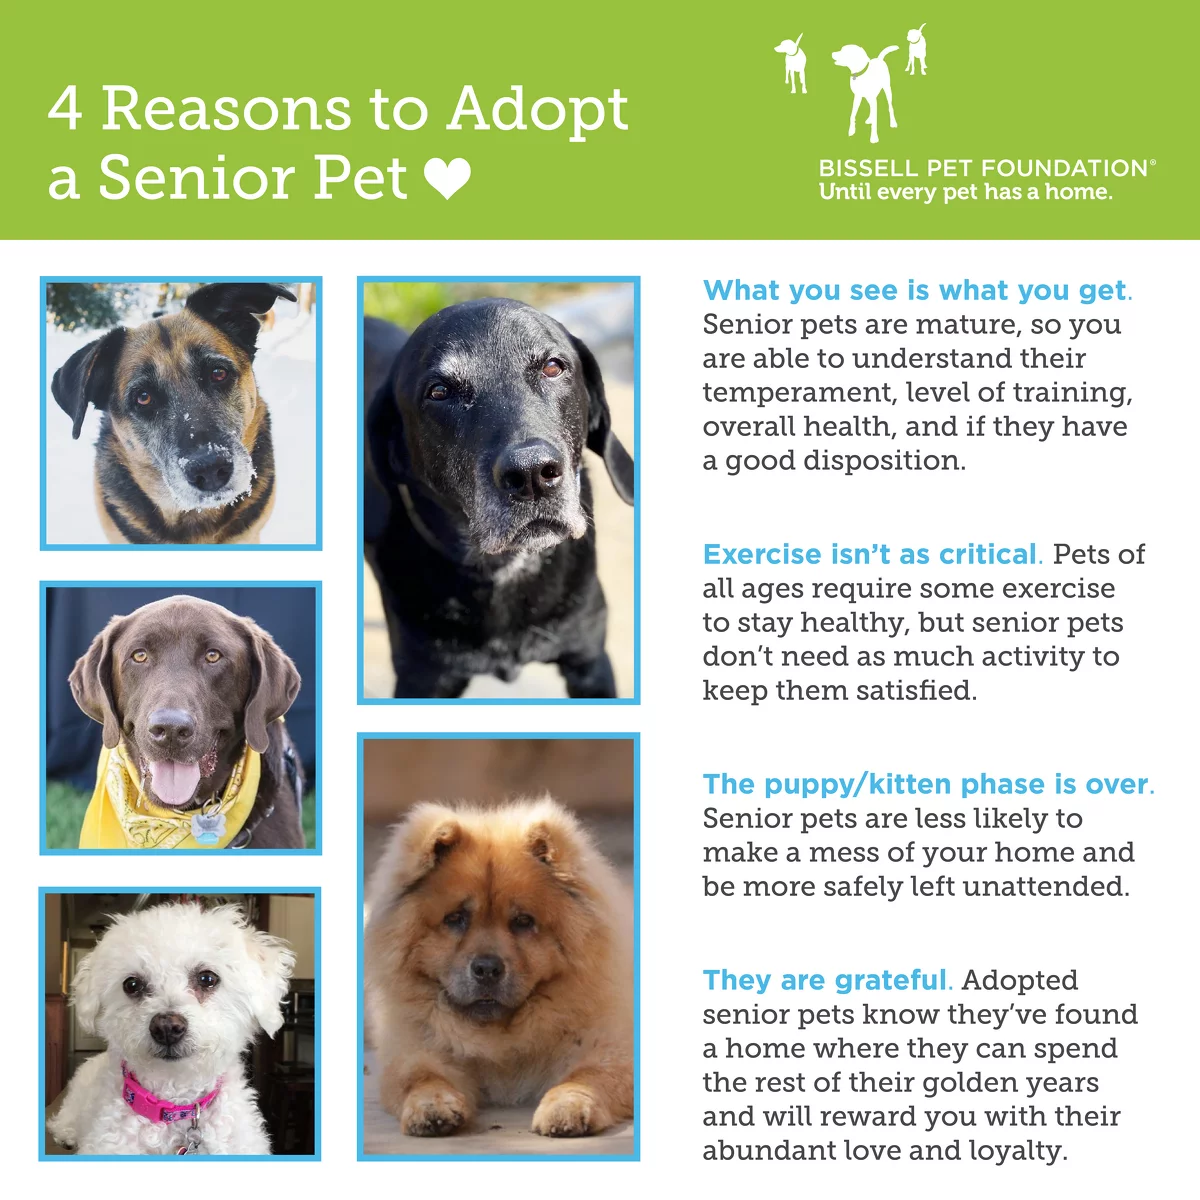 Reasons to adopt a senior pet